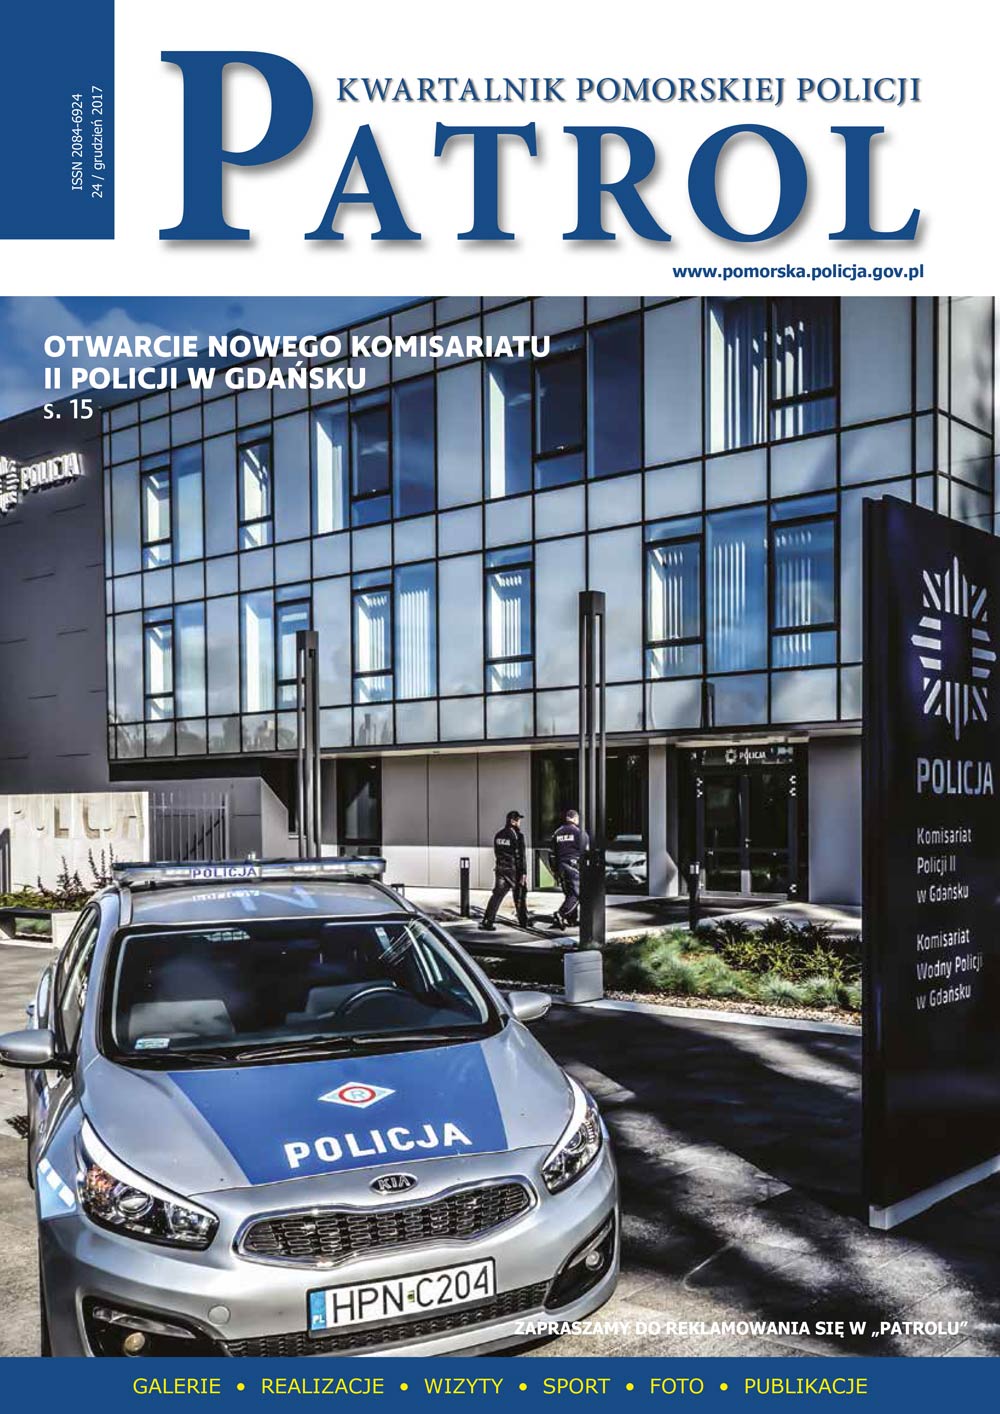 [2017, 04] PATROL. KWARTALNIK POMORSKIEJ POLICJI. - 2017, [nr] 24 / wrzesień, www.pomorska.policja.gov.pl